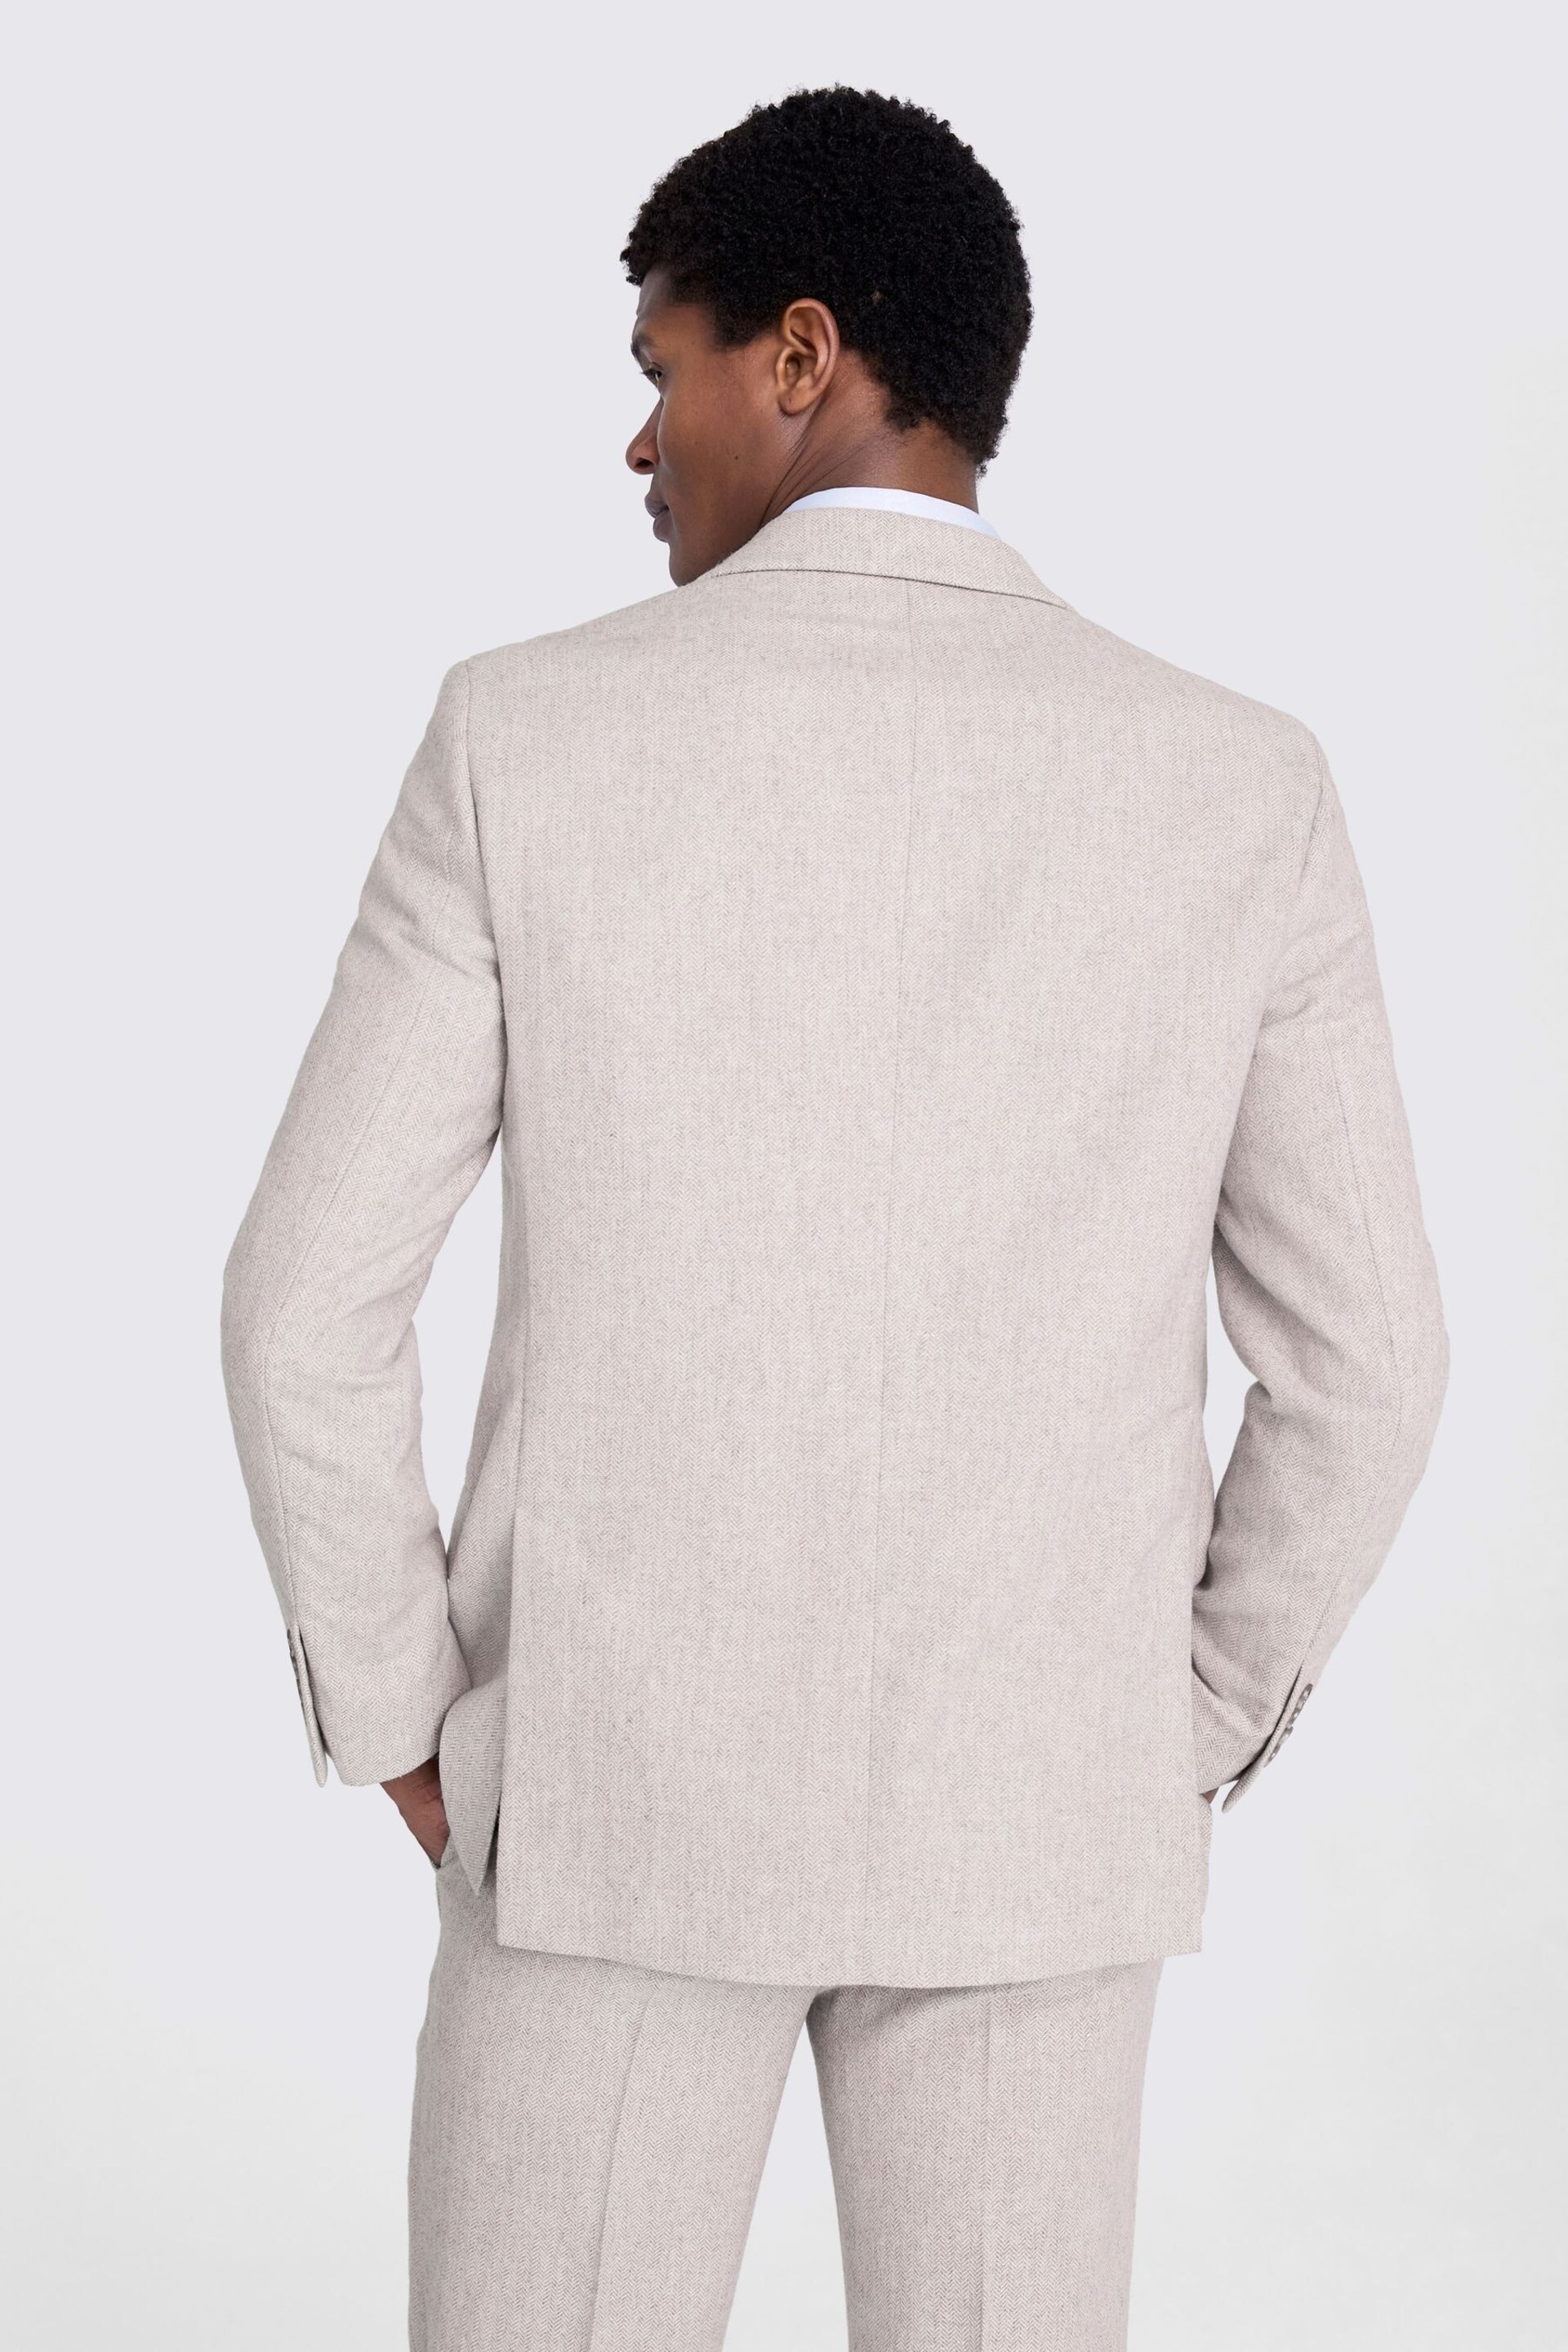 MOSS Light Grey Tailored Fit Herringbone Suit Jacket - Image 2 of 5